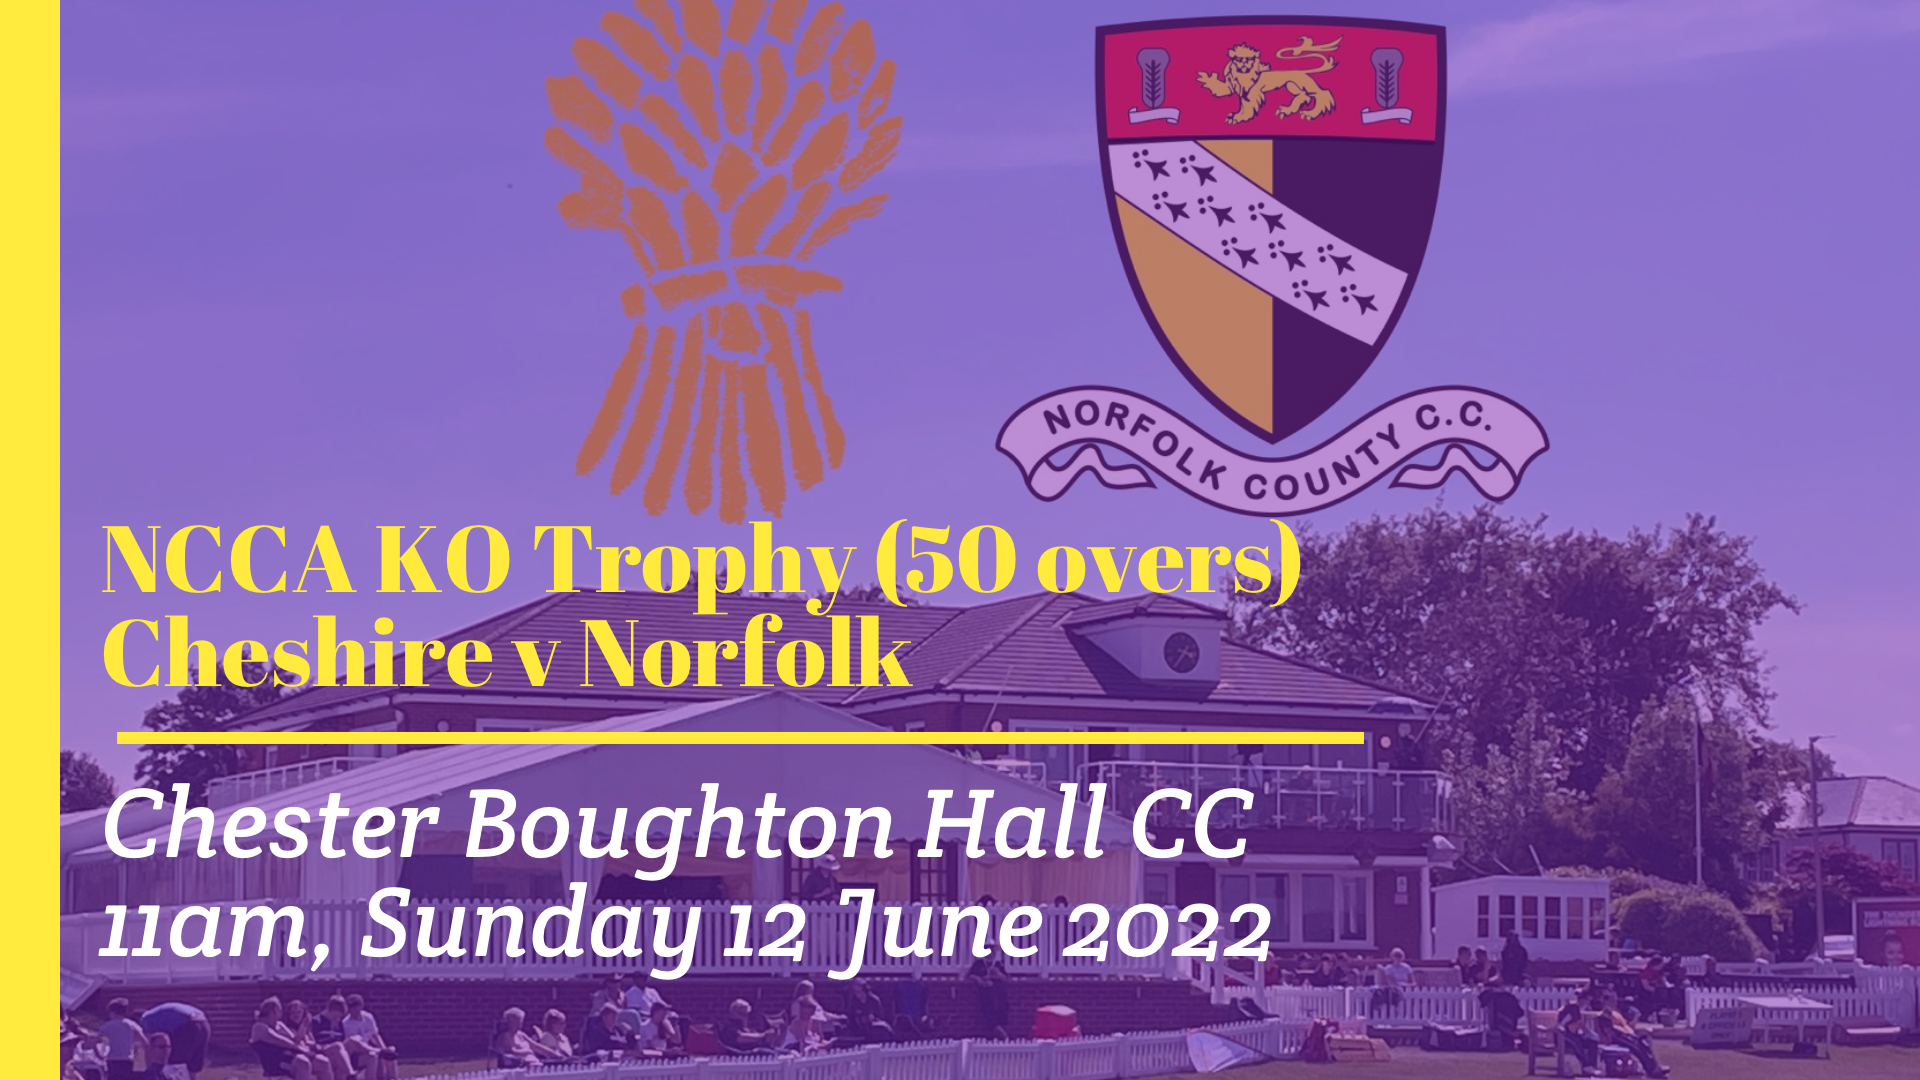 Cheshire v Norfolk at Chester Boughton Hall, Sunday 12 June 